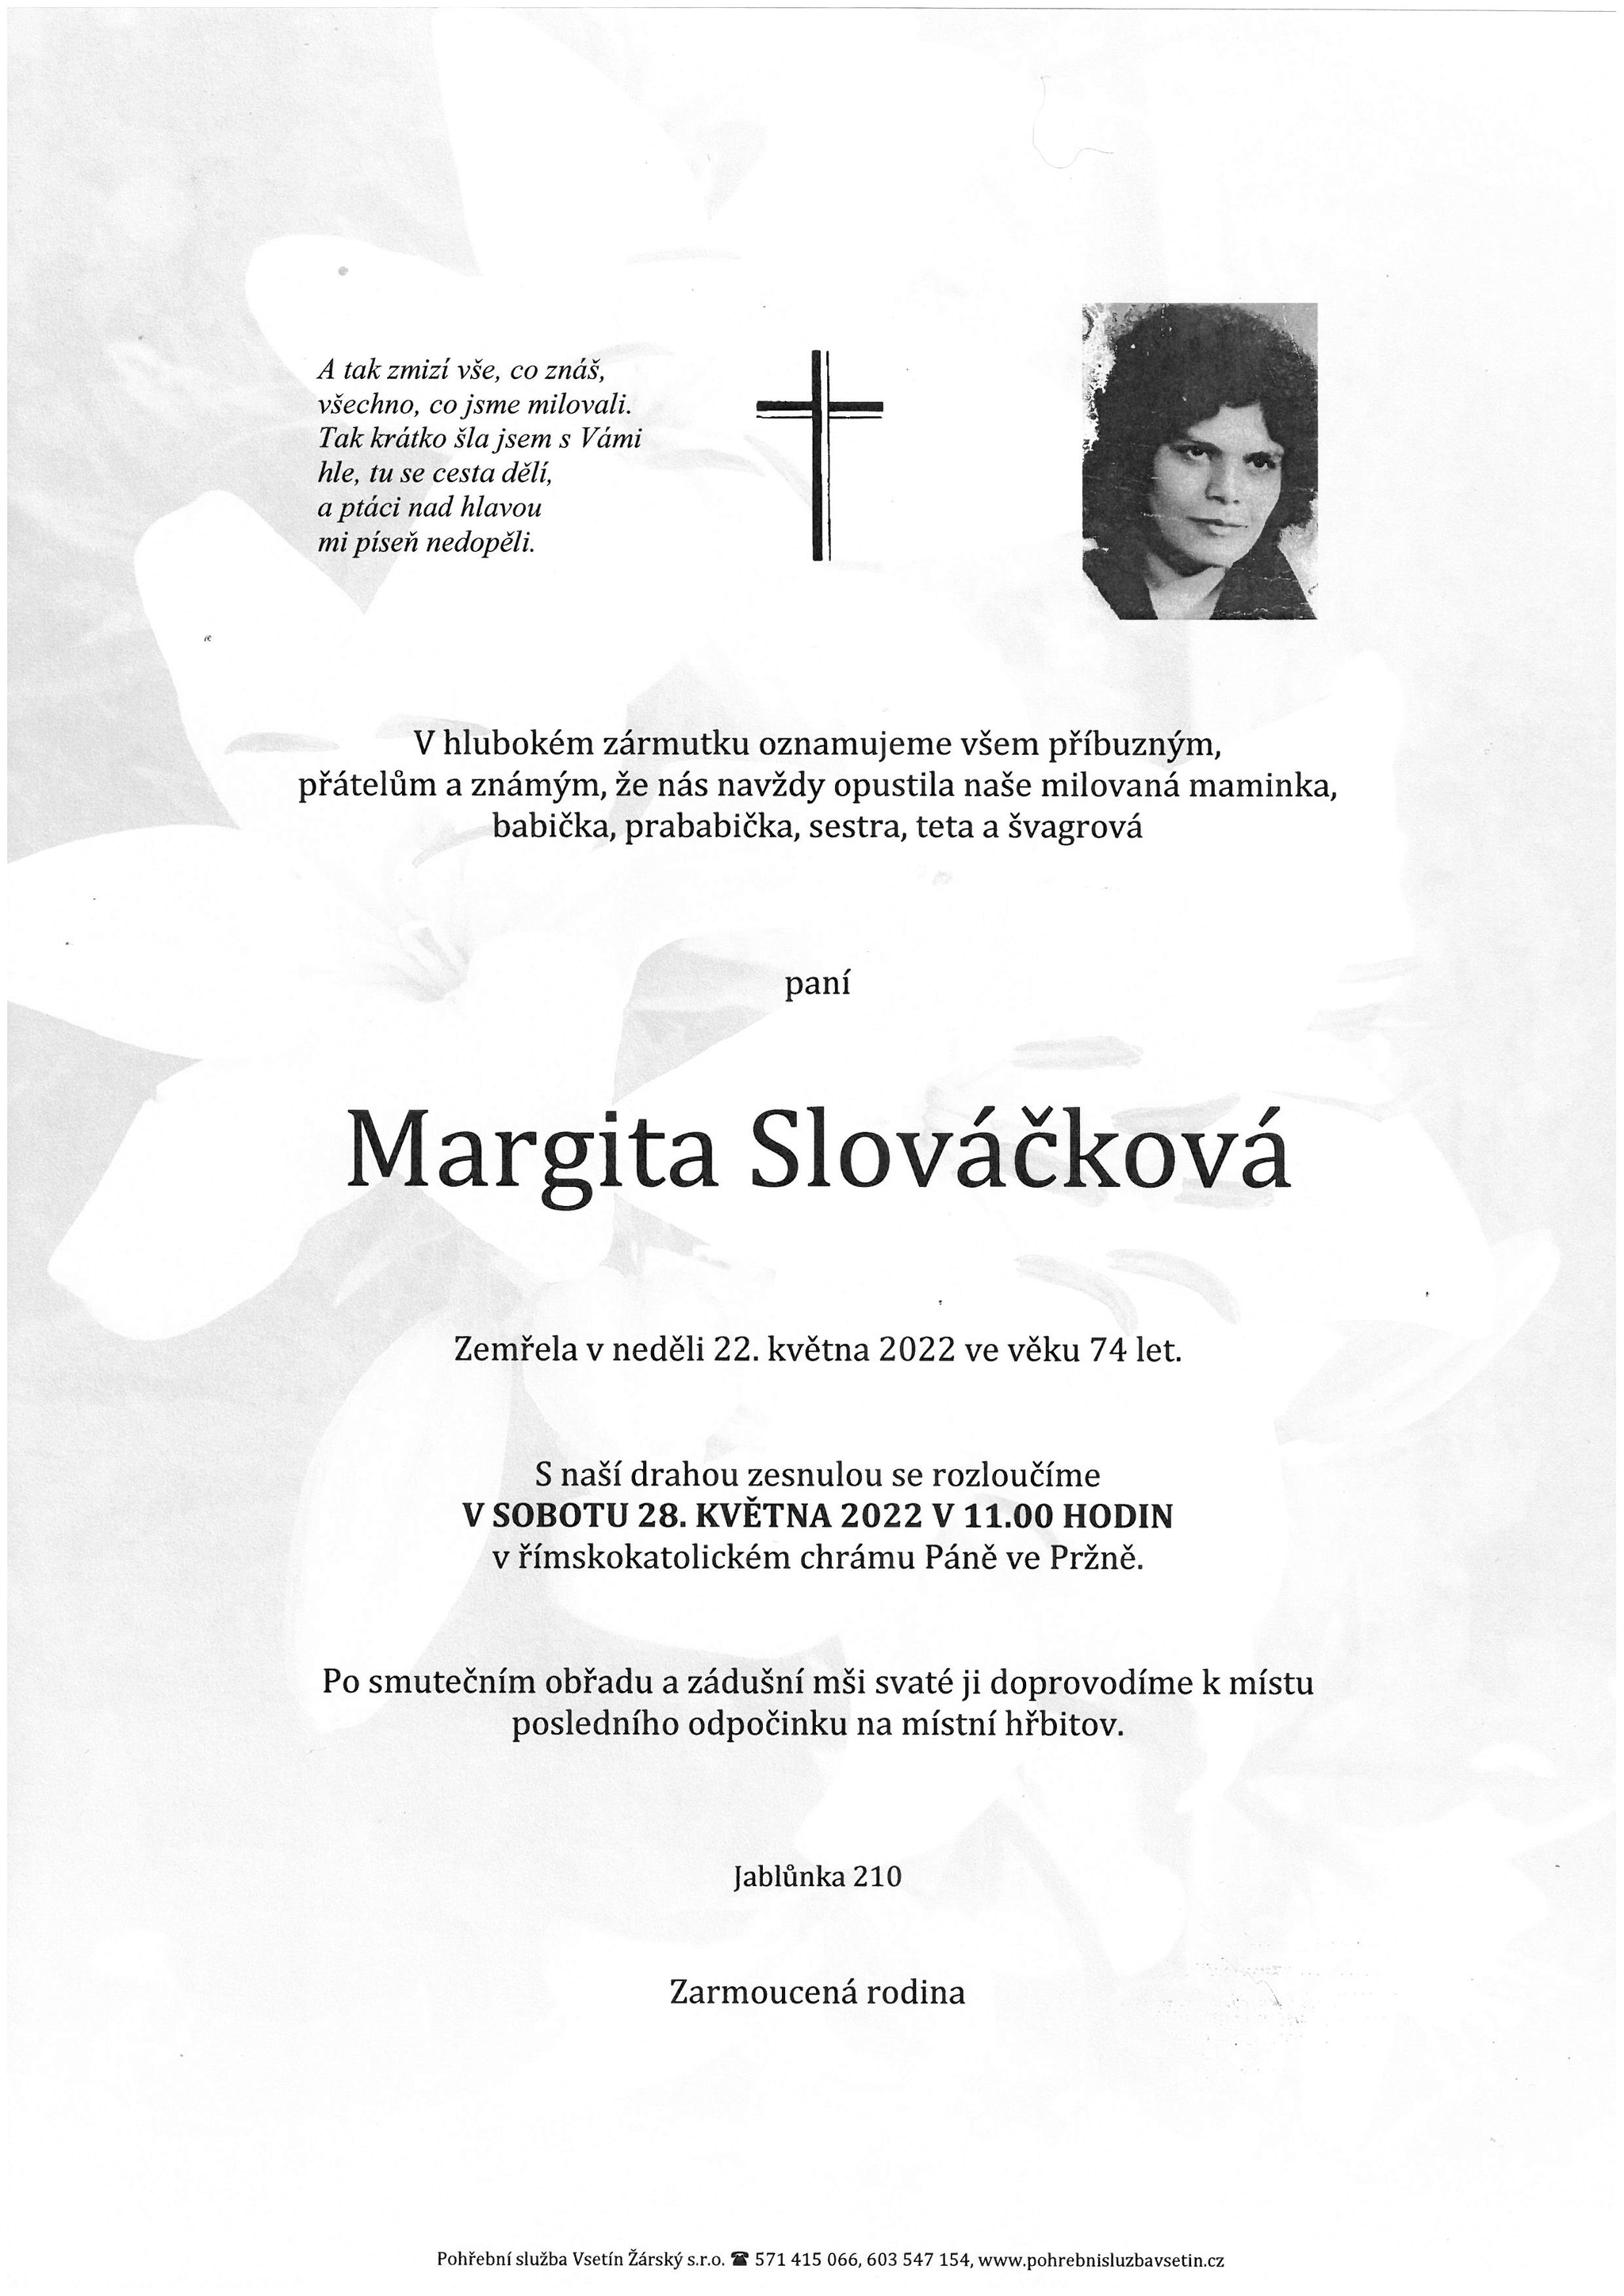 Margita Slováčková